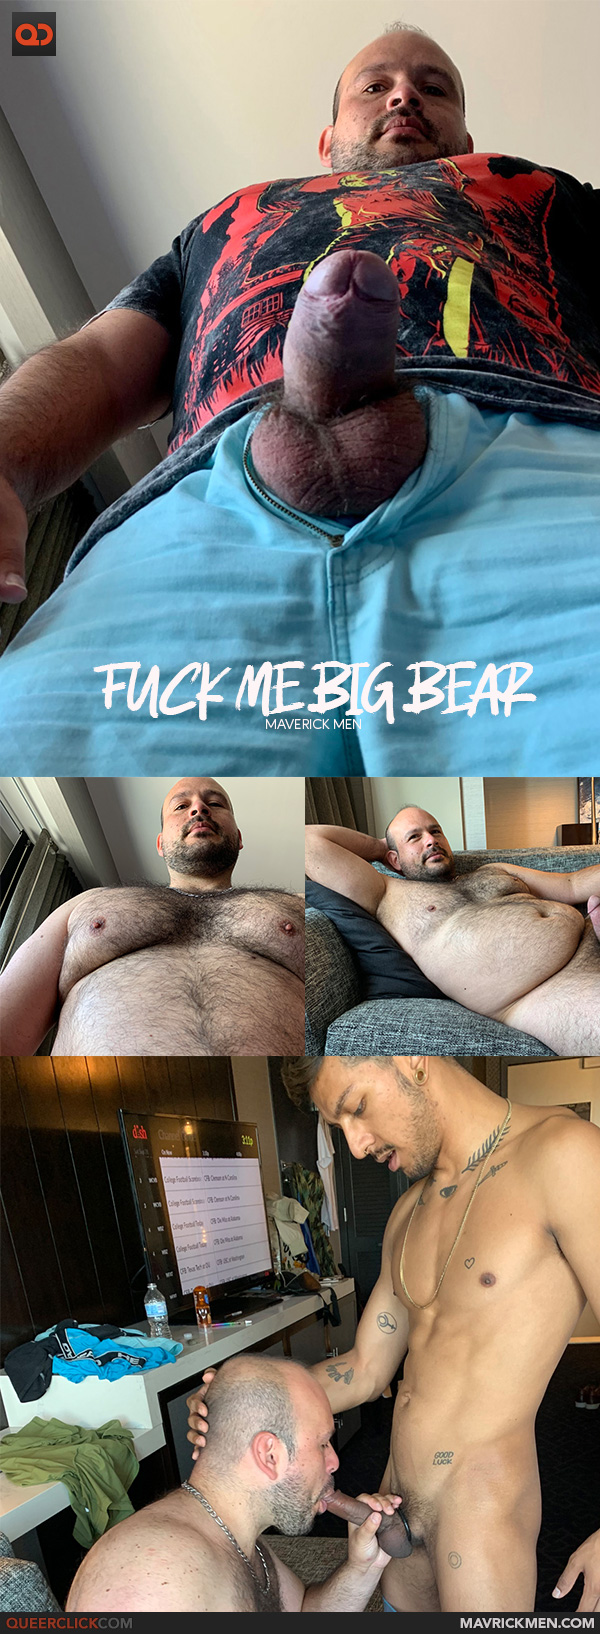 Maverick Men Directs: Fuck Me Big Bear